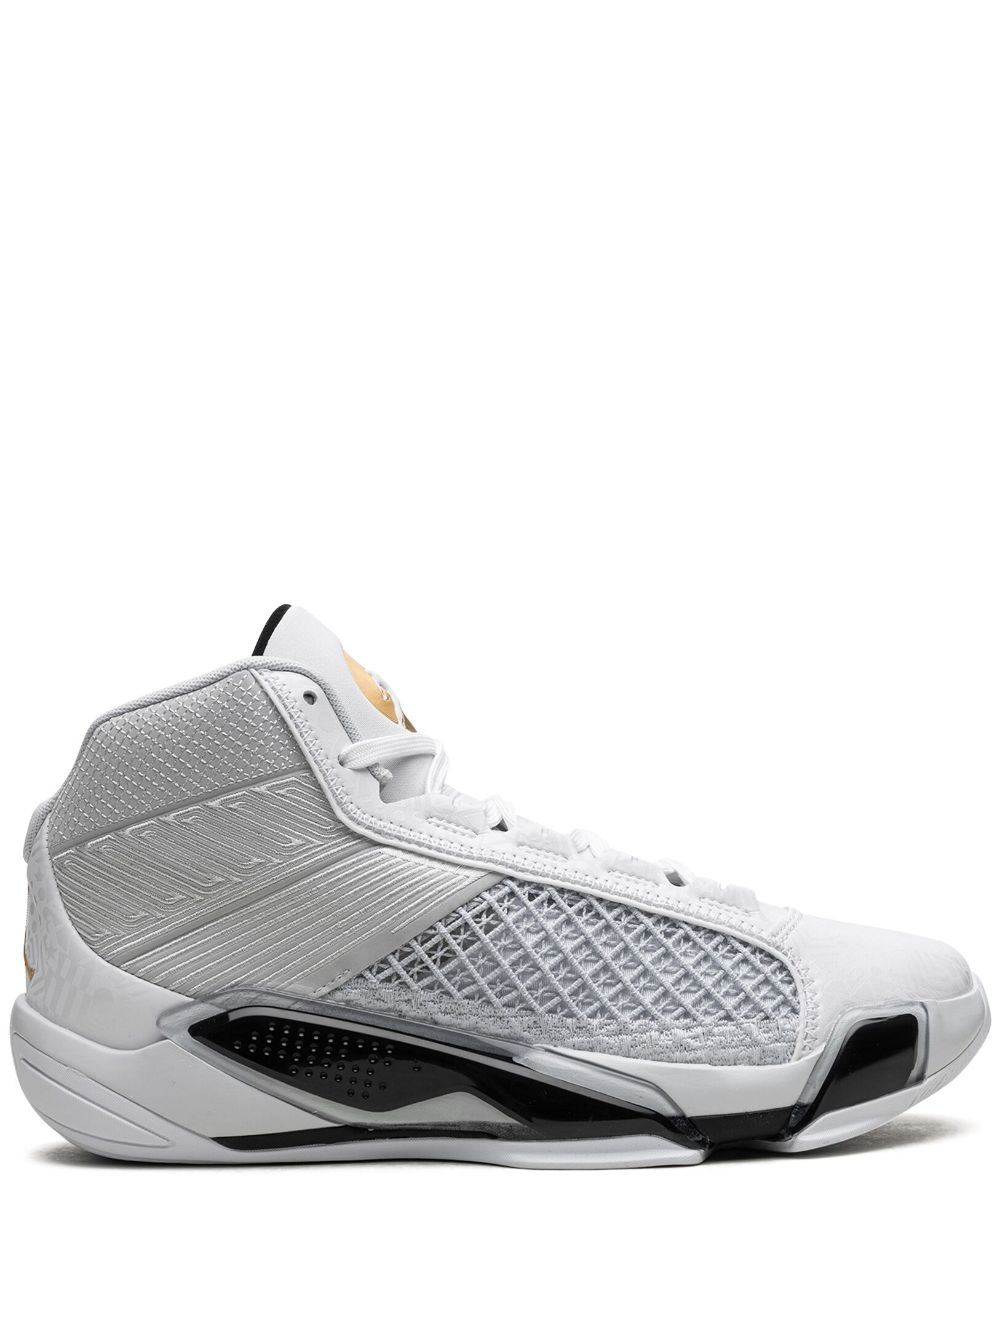 Jordan Jordan 38 PF "Fiba (White Sole)" sneakers